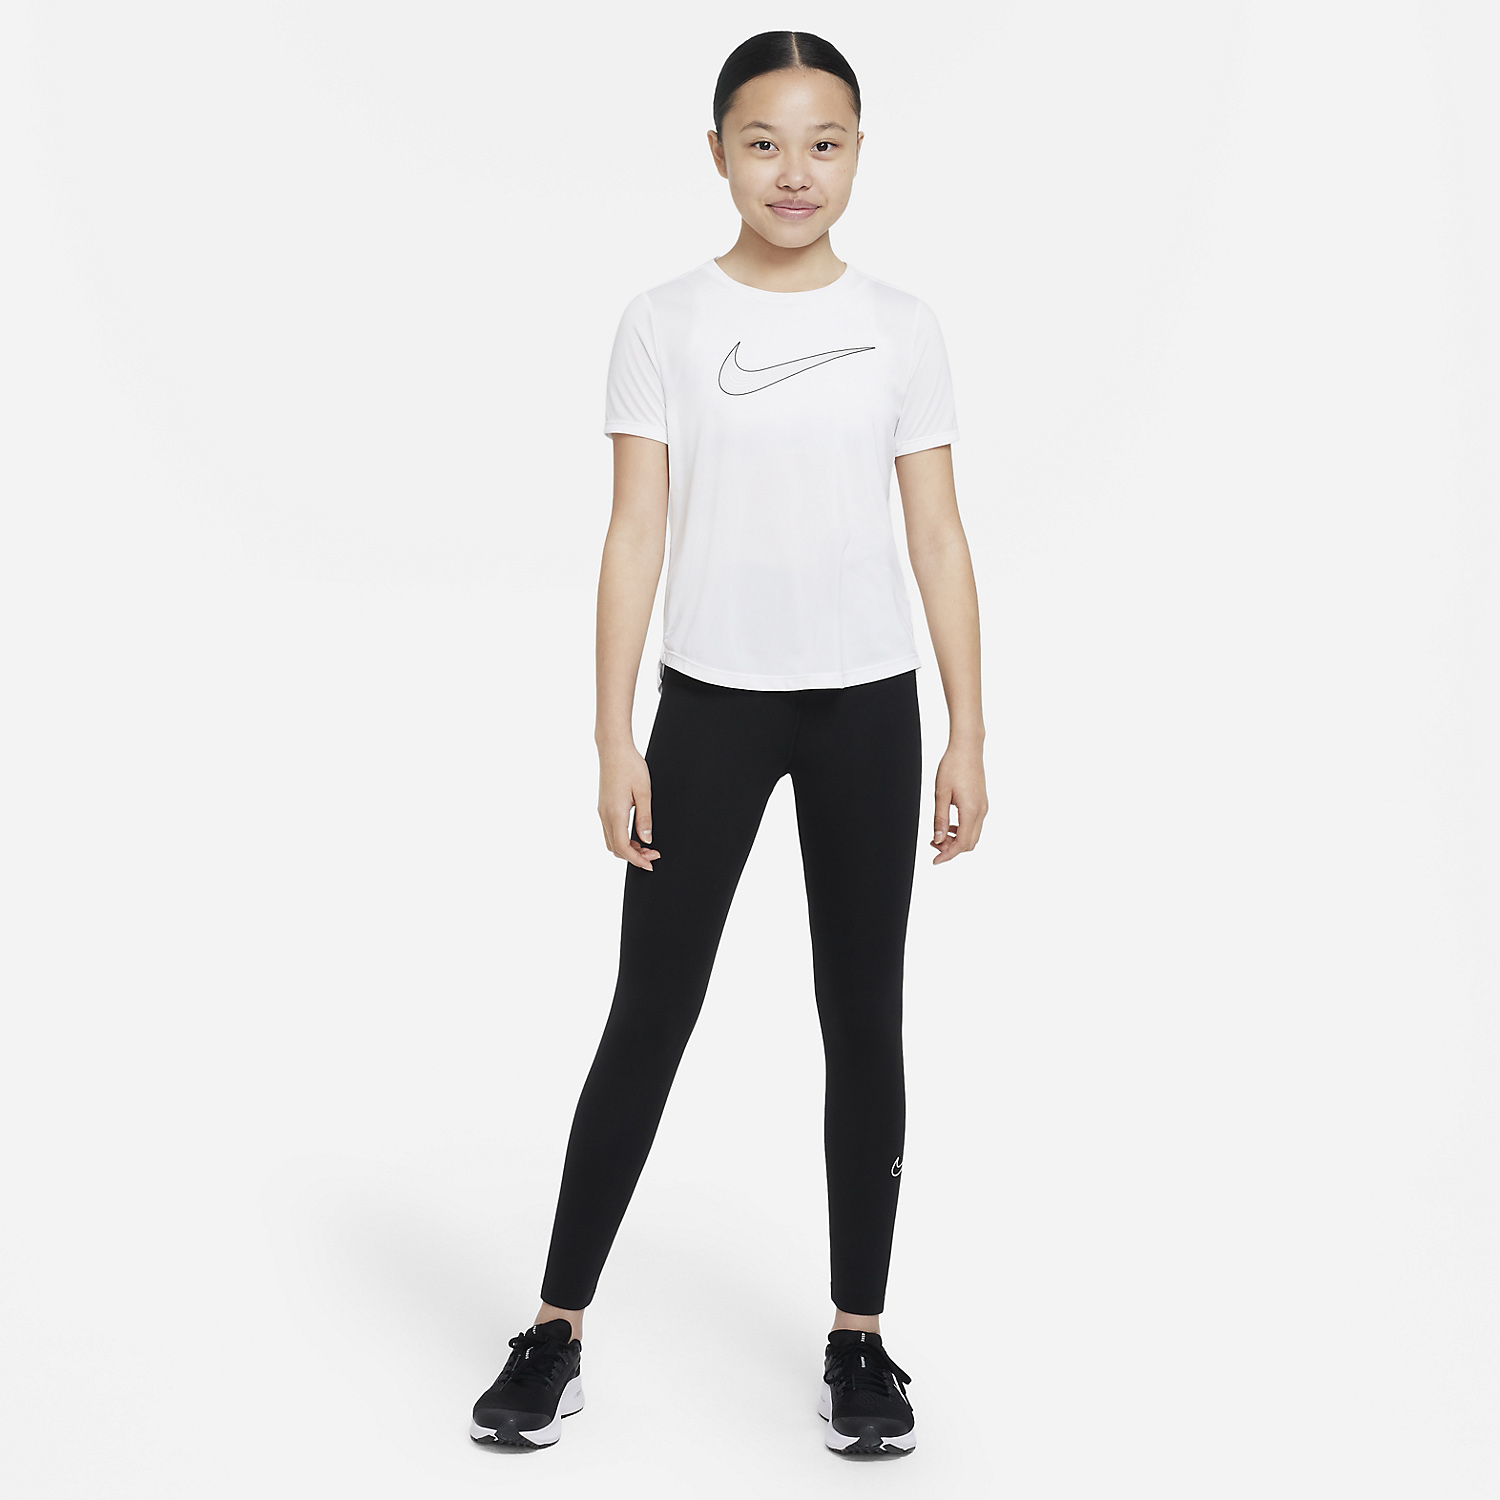 Nike Performance Leggings - carbon heather/white/grey 